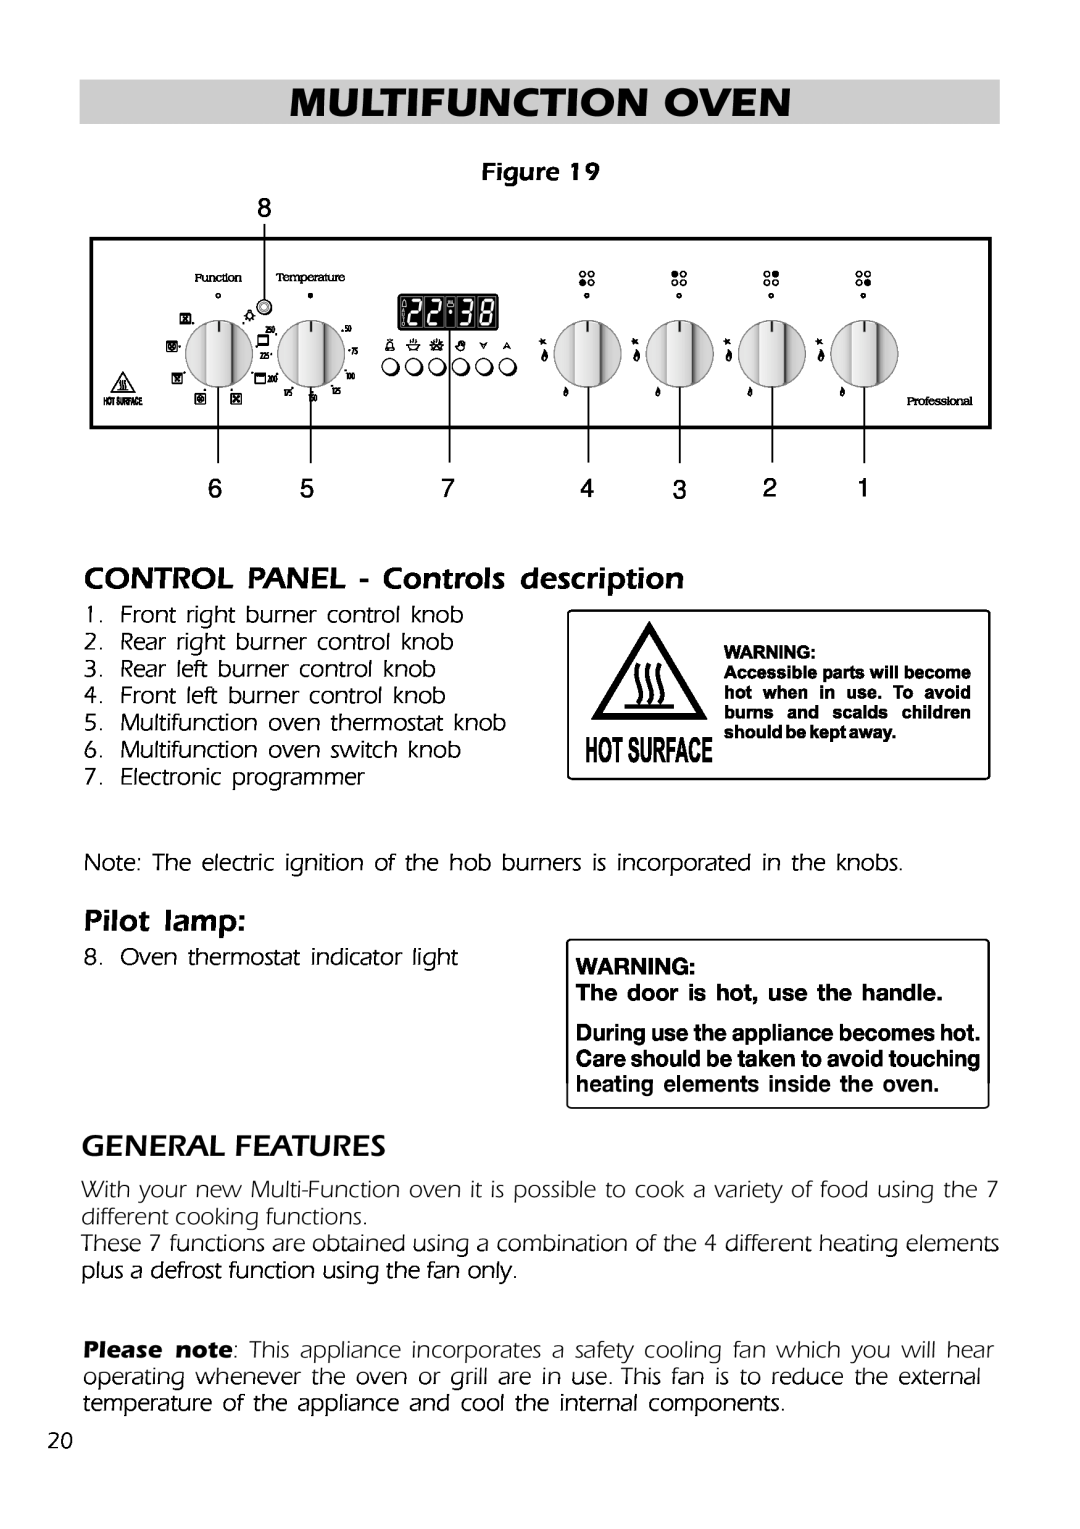 DeLonghi DS 61 GW manual Multifunction Oven, CONTROL PANEL - Controls description, Pilot lamp, General Features 